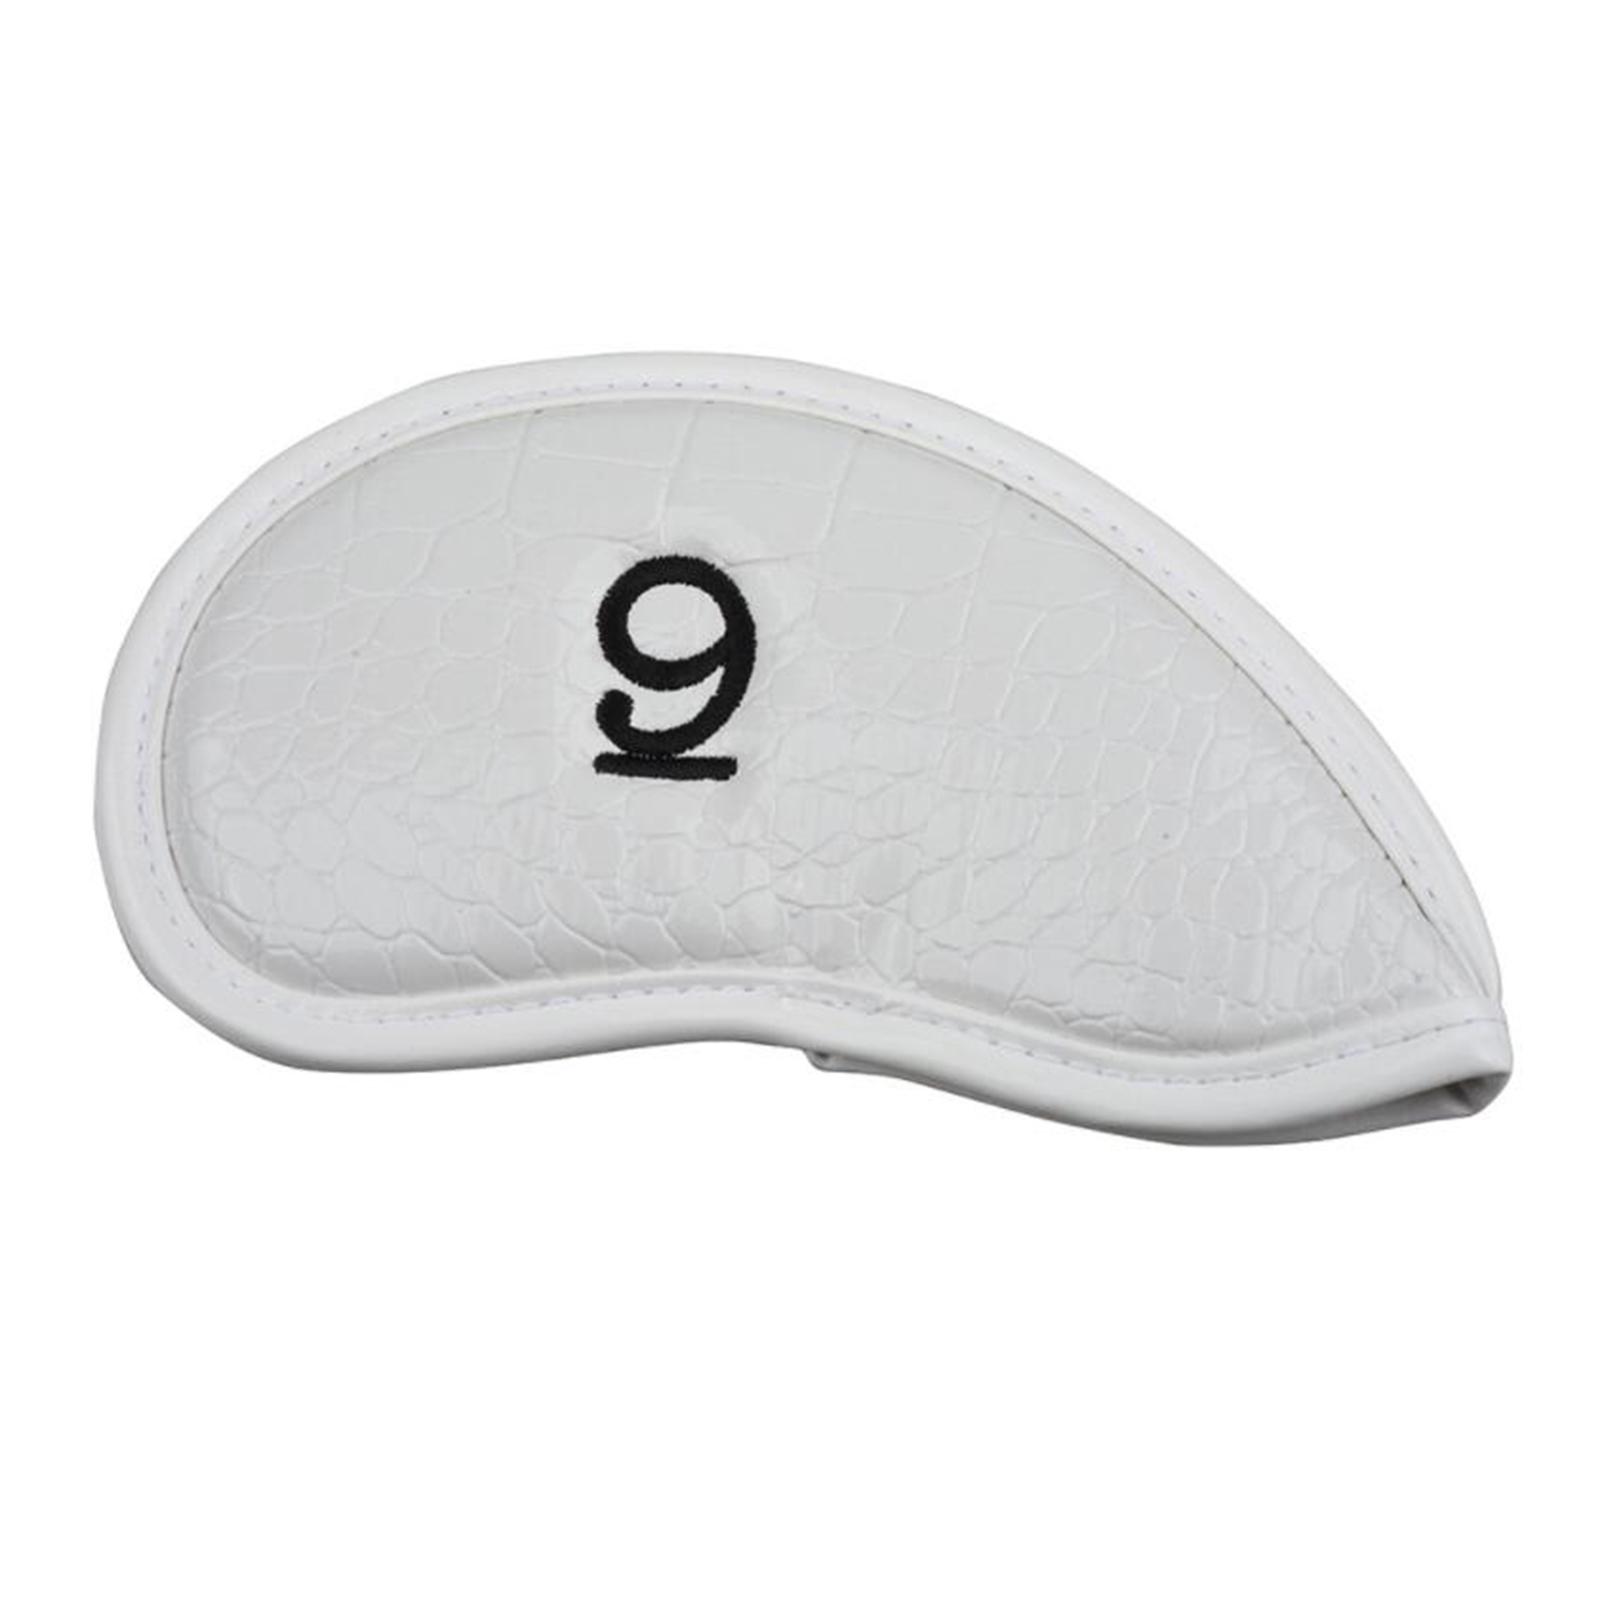 12x Golf Iron Head Cover Leather PU Golf Club Headcover Universal Waterproof White